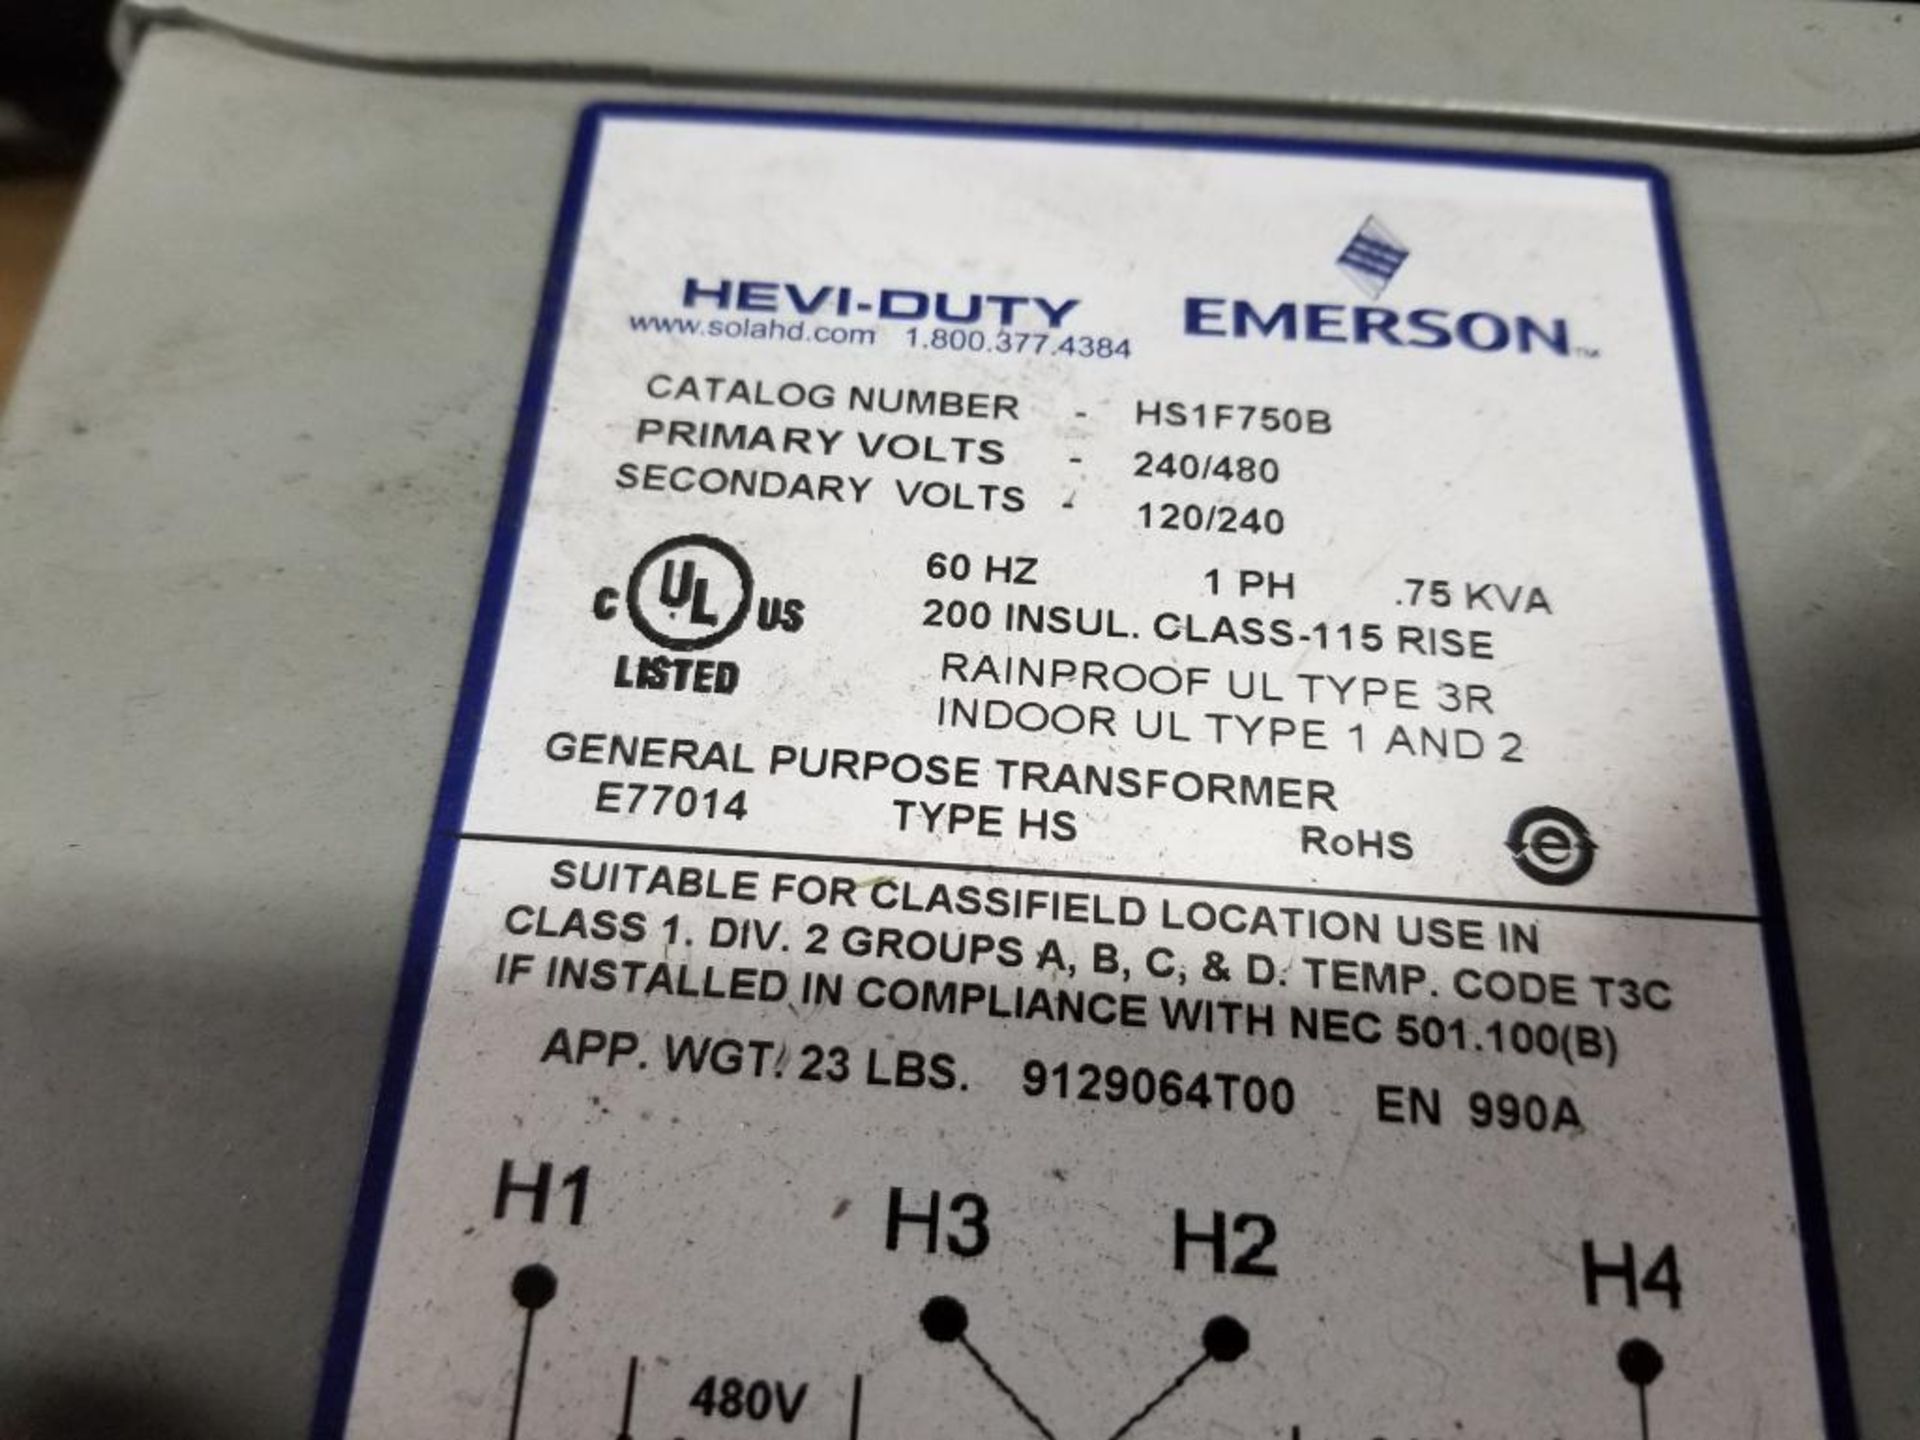 Emerson Hevi-Duty HS1F750B transformer. - Image 2 of 4